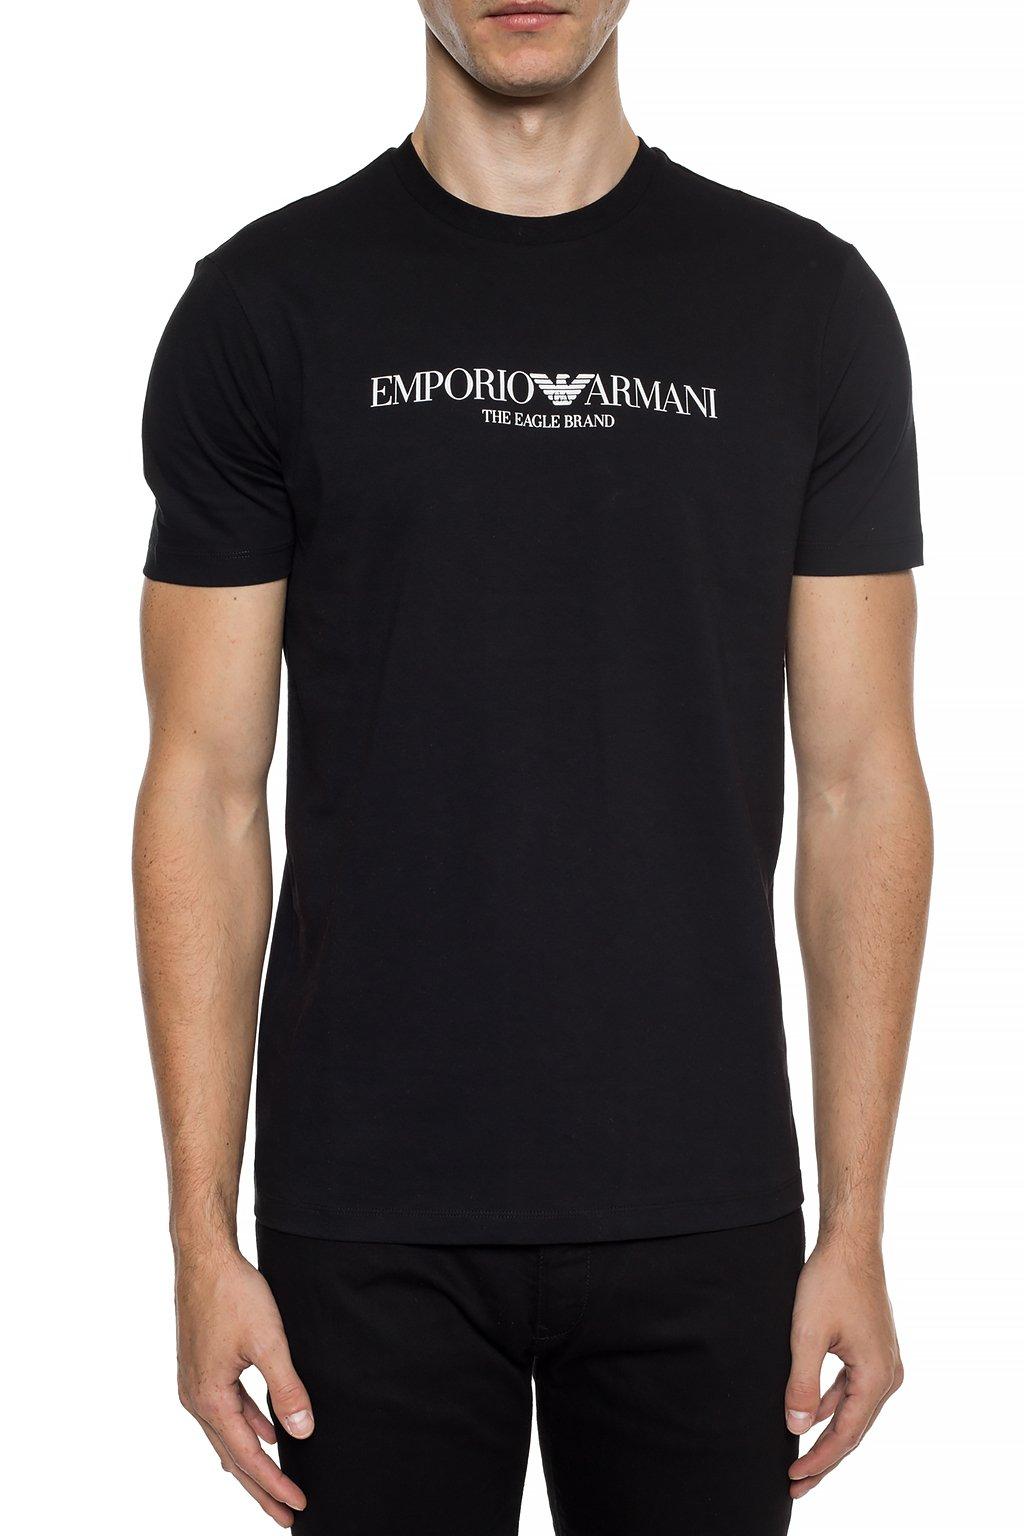 Emporio Armani Cotton Logo-printed T-shirt in Black for Men - Lyst